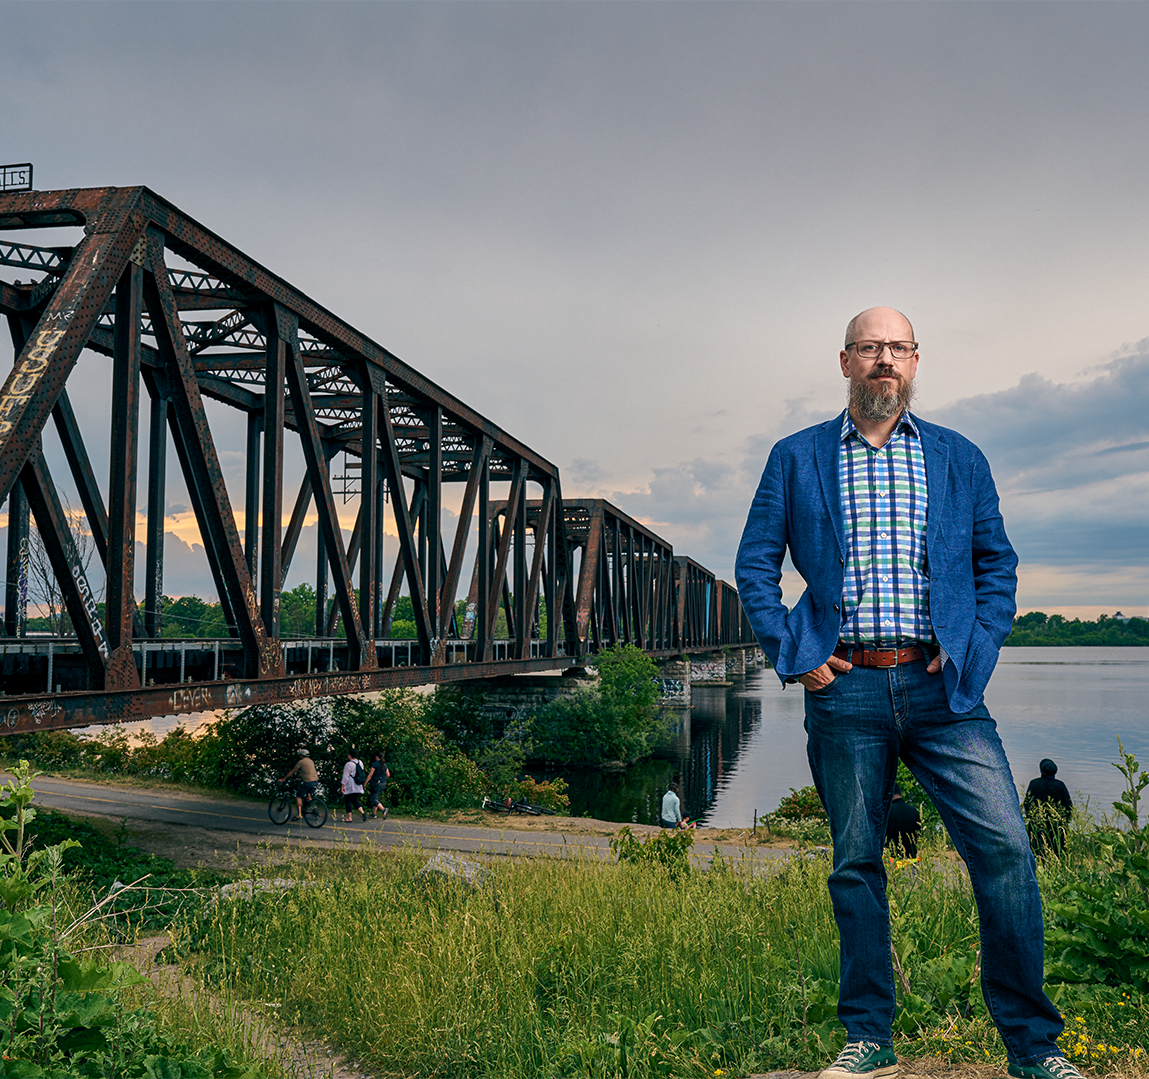 Portrait of Michael Spratt standing on grass in front of industrial bridge and water